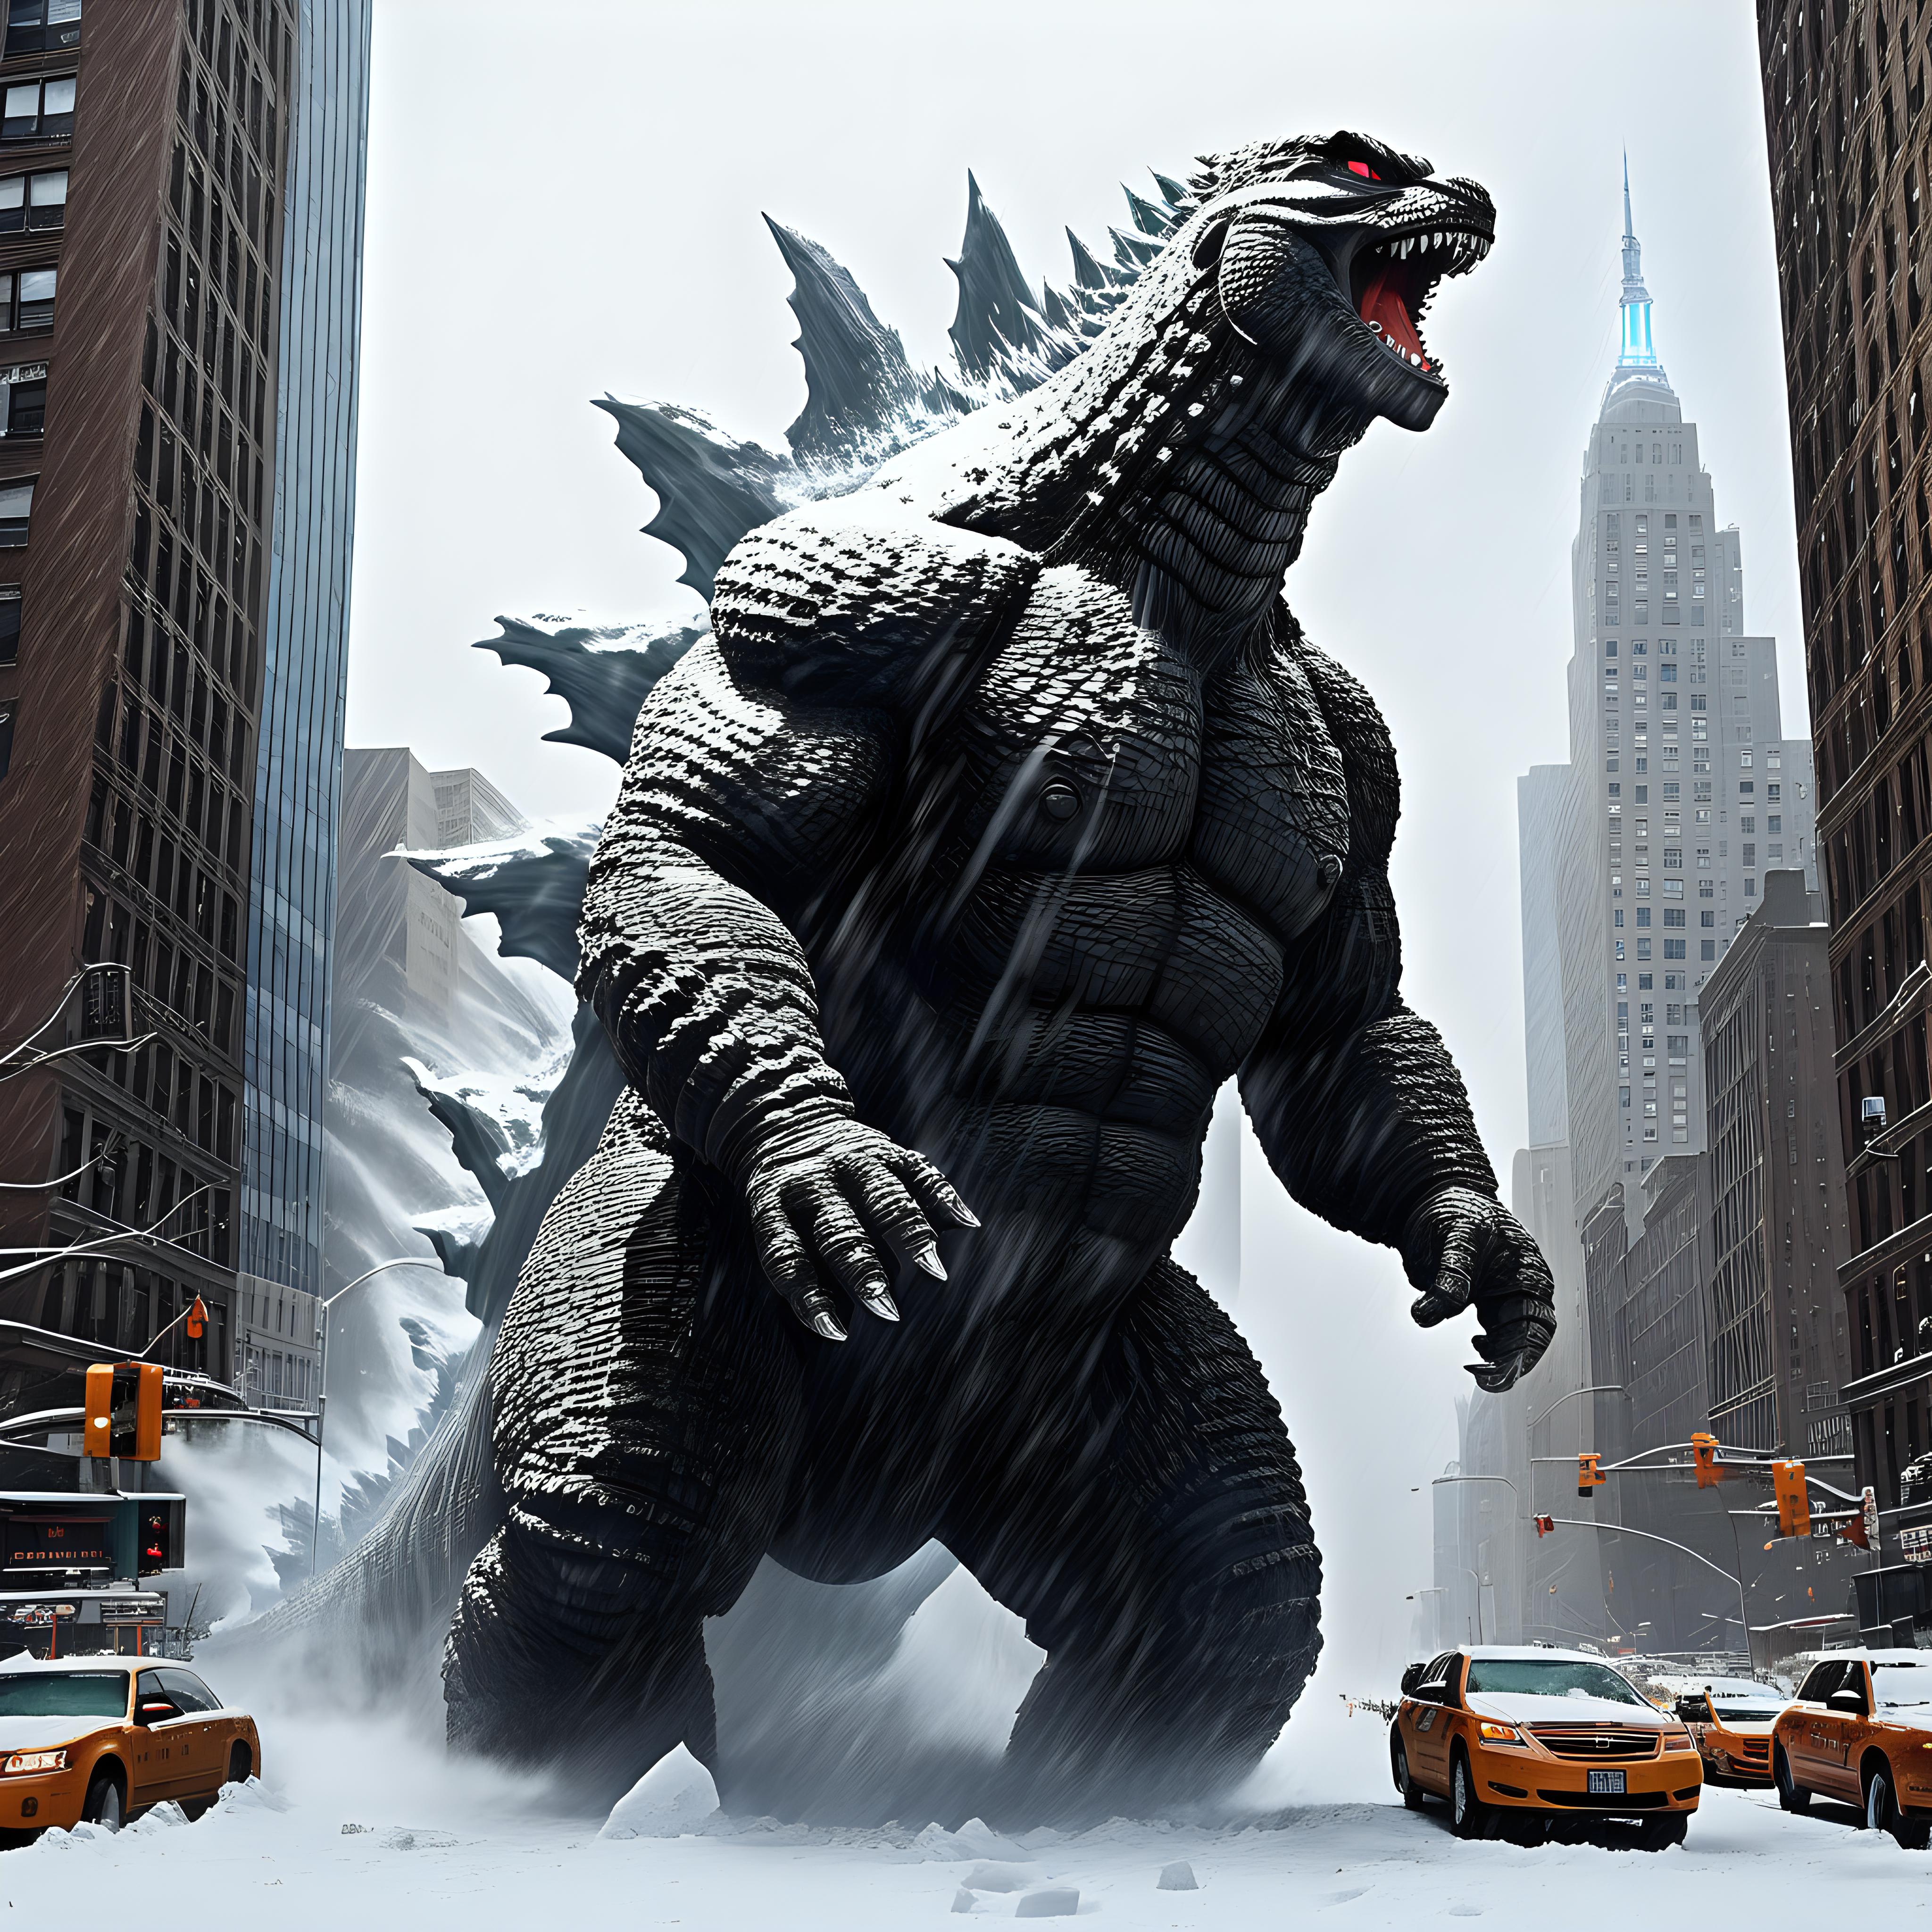 Godzilla destroying NYC in winter snow storm